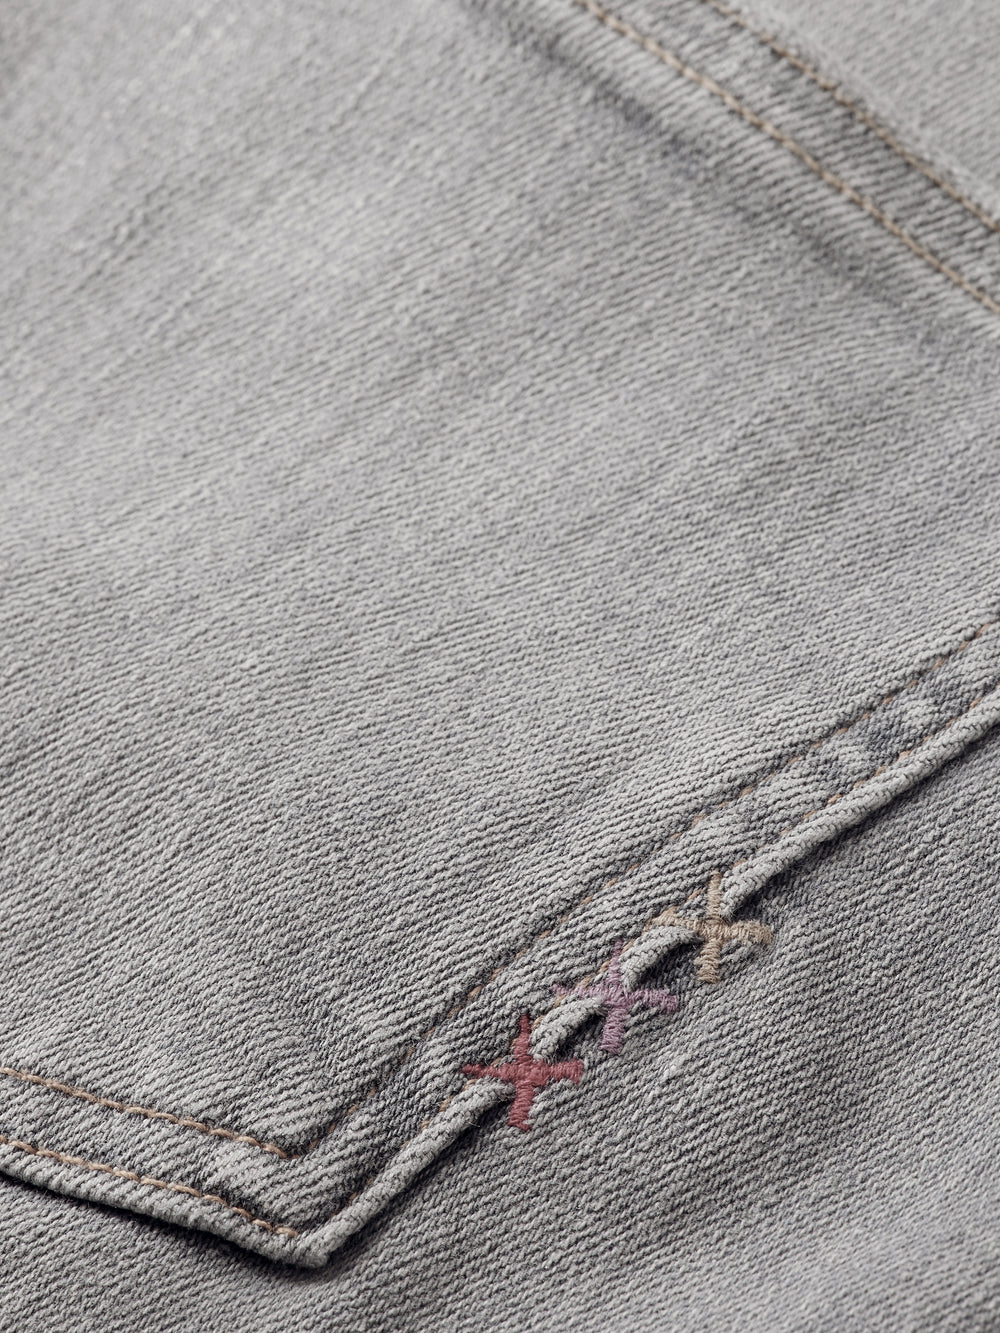 High-Five slim tapered-fit jeans - Scotch & Soda NZ